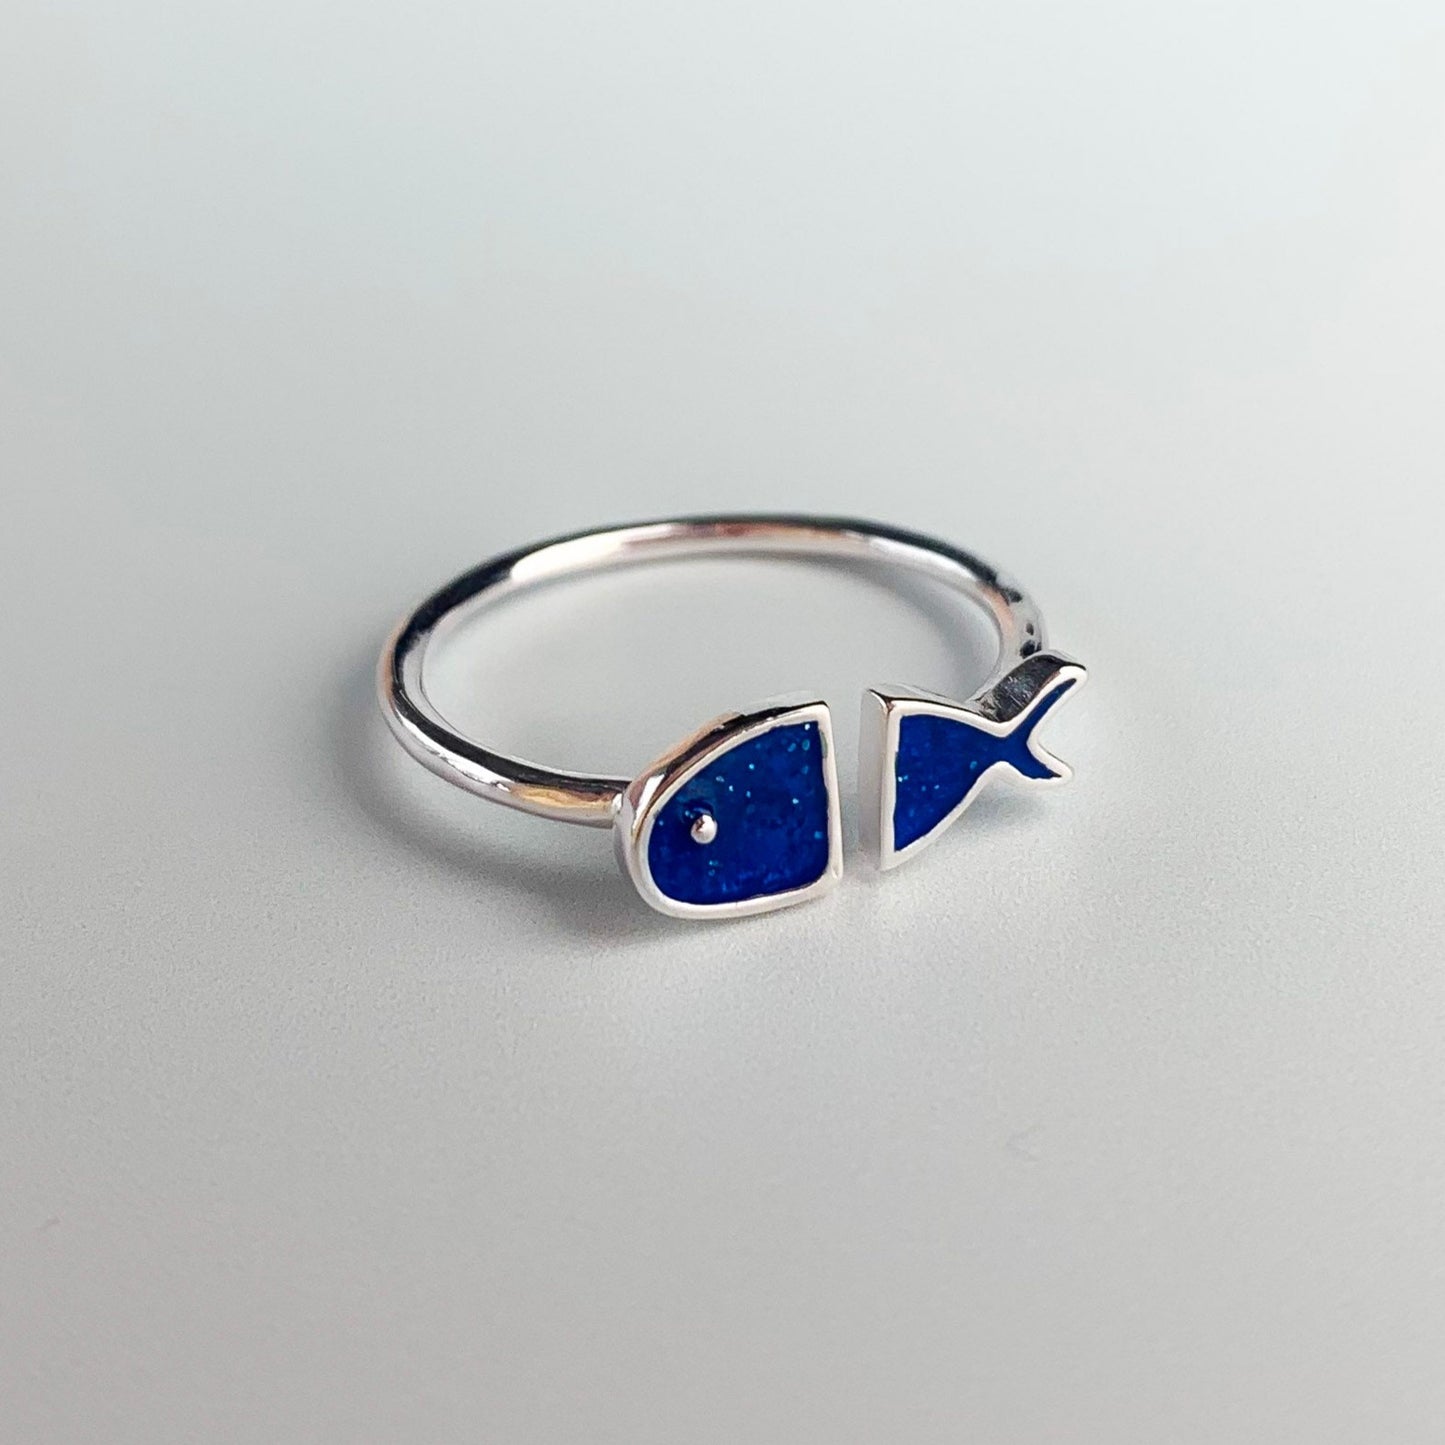 Blue Fish Adjustable Ring